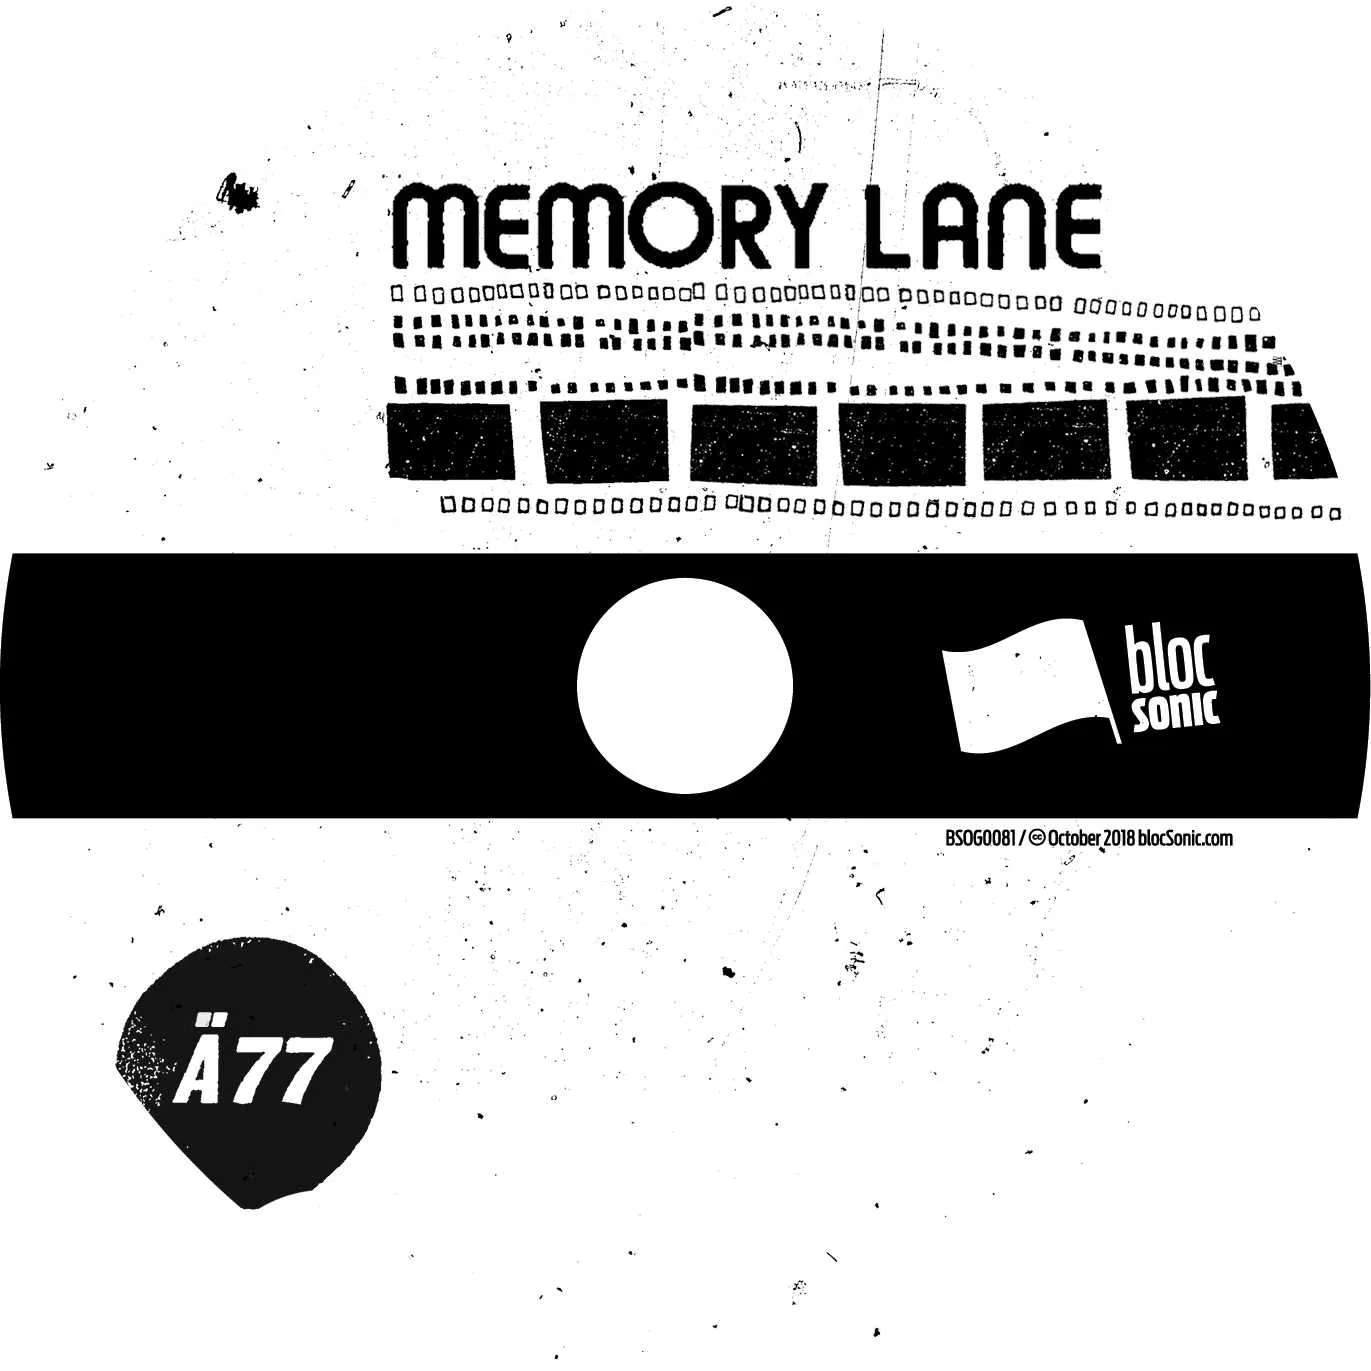 Album disc for “Memory Lane” by aitänna77